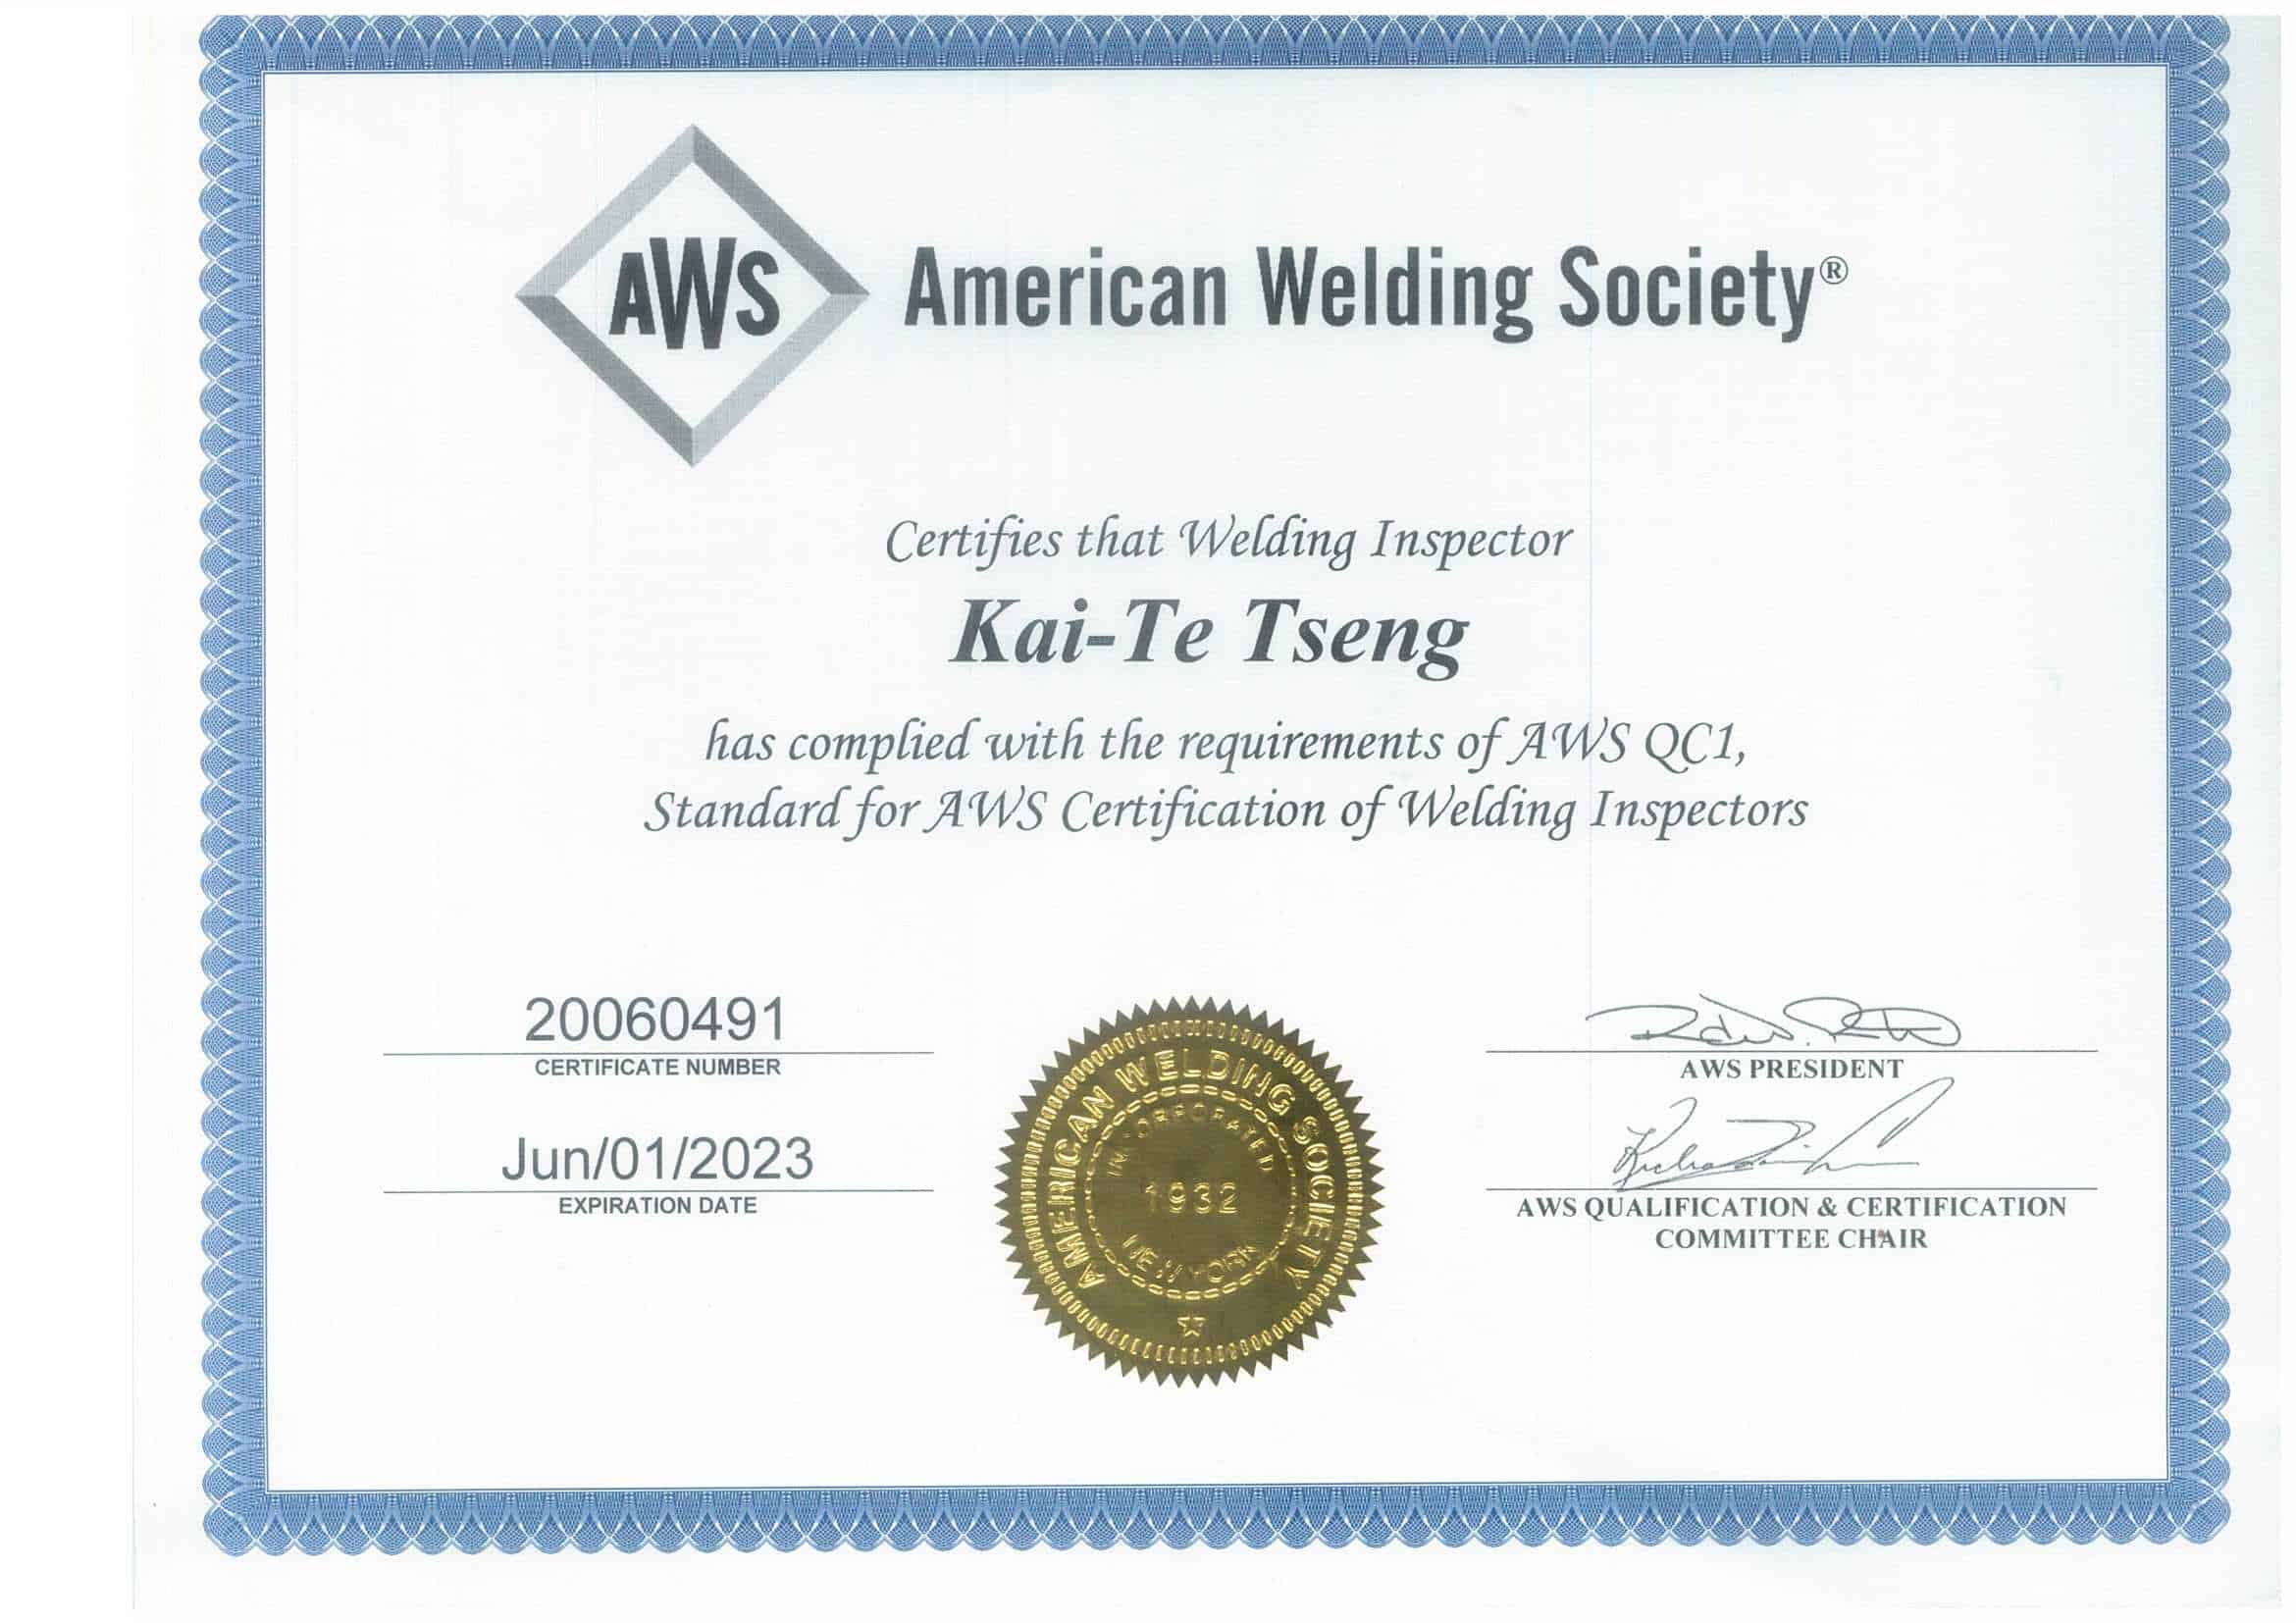 Congratulations!! Obtained AWS American Welding Inspector License-Kai-Te Tseng 1